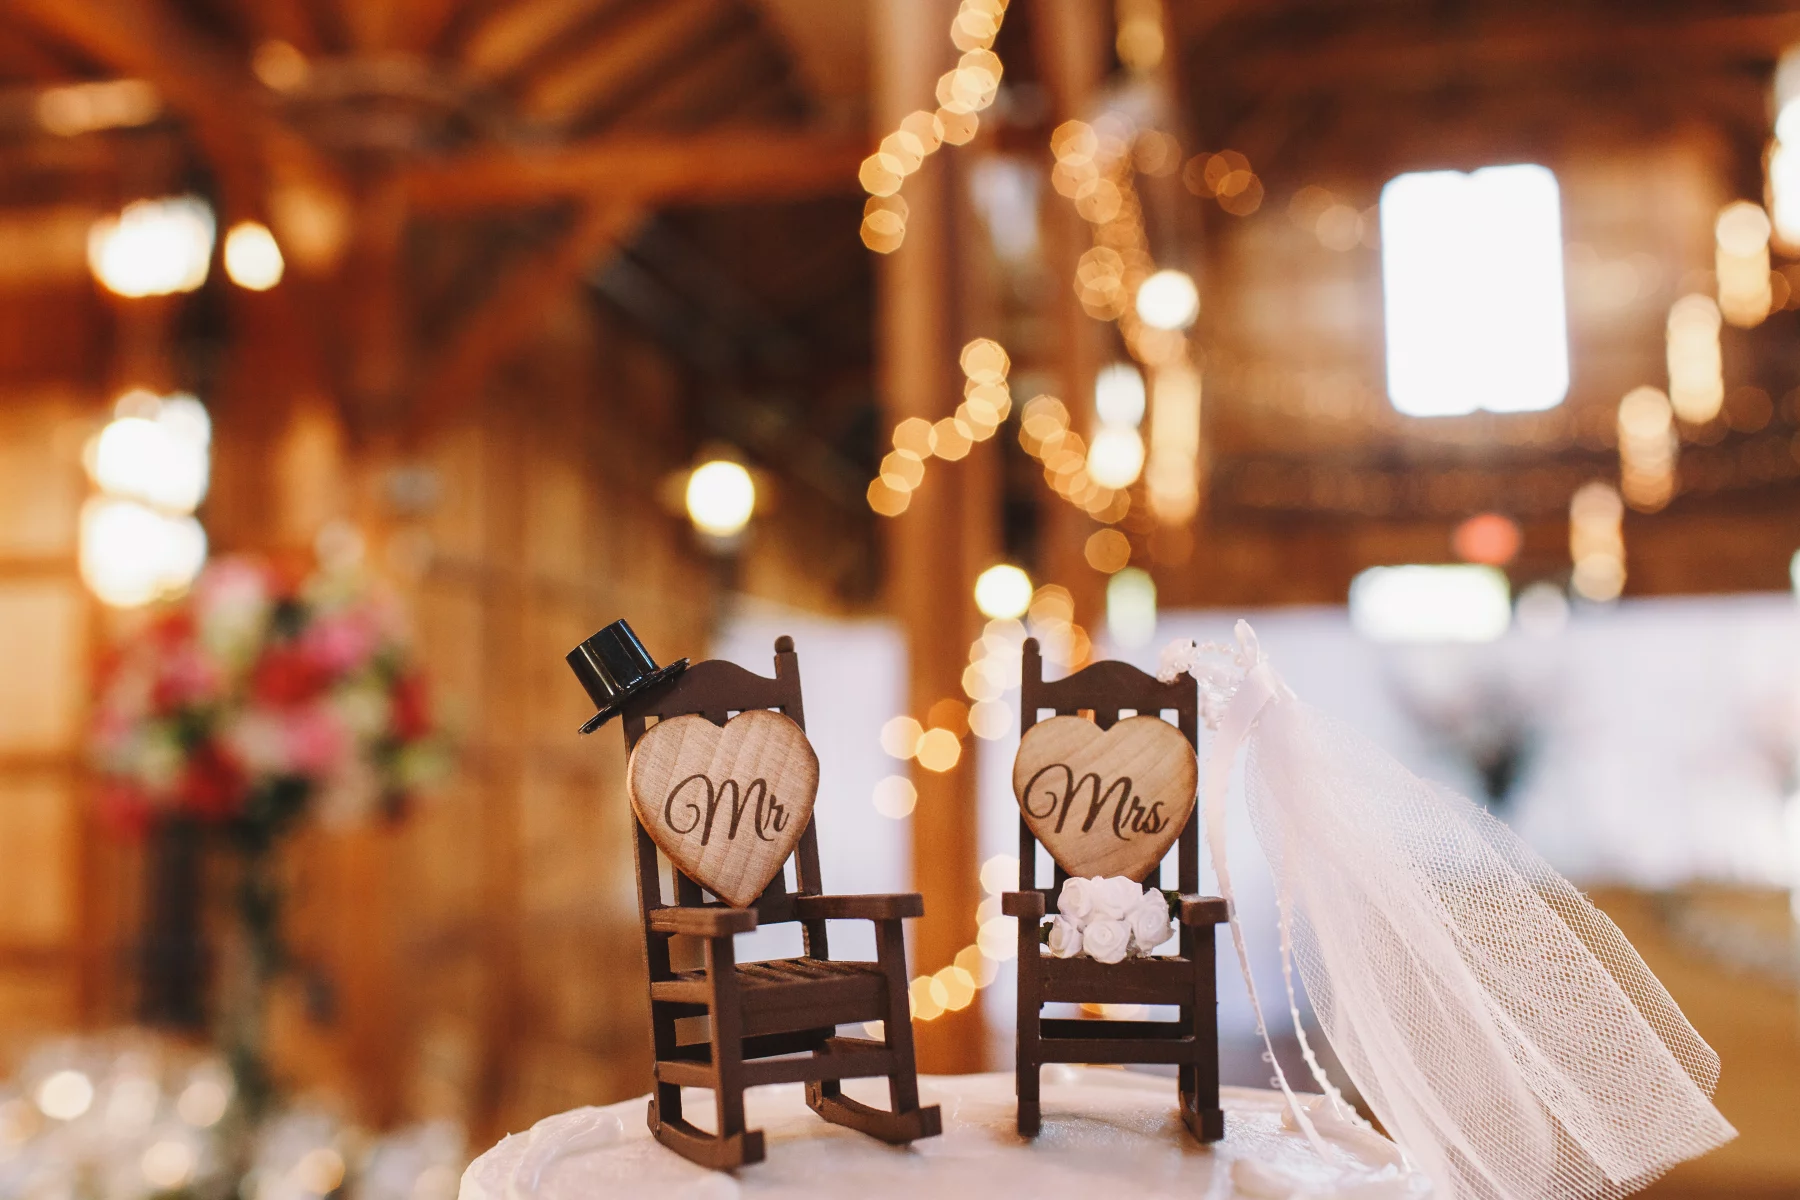 Wedding cake decor made two rocking chairs